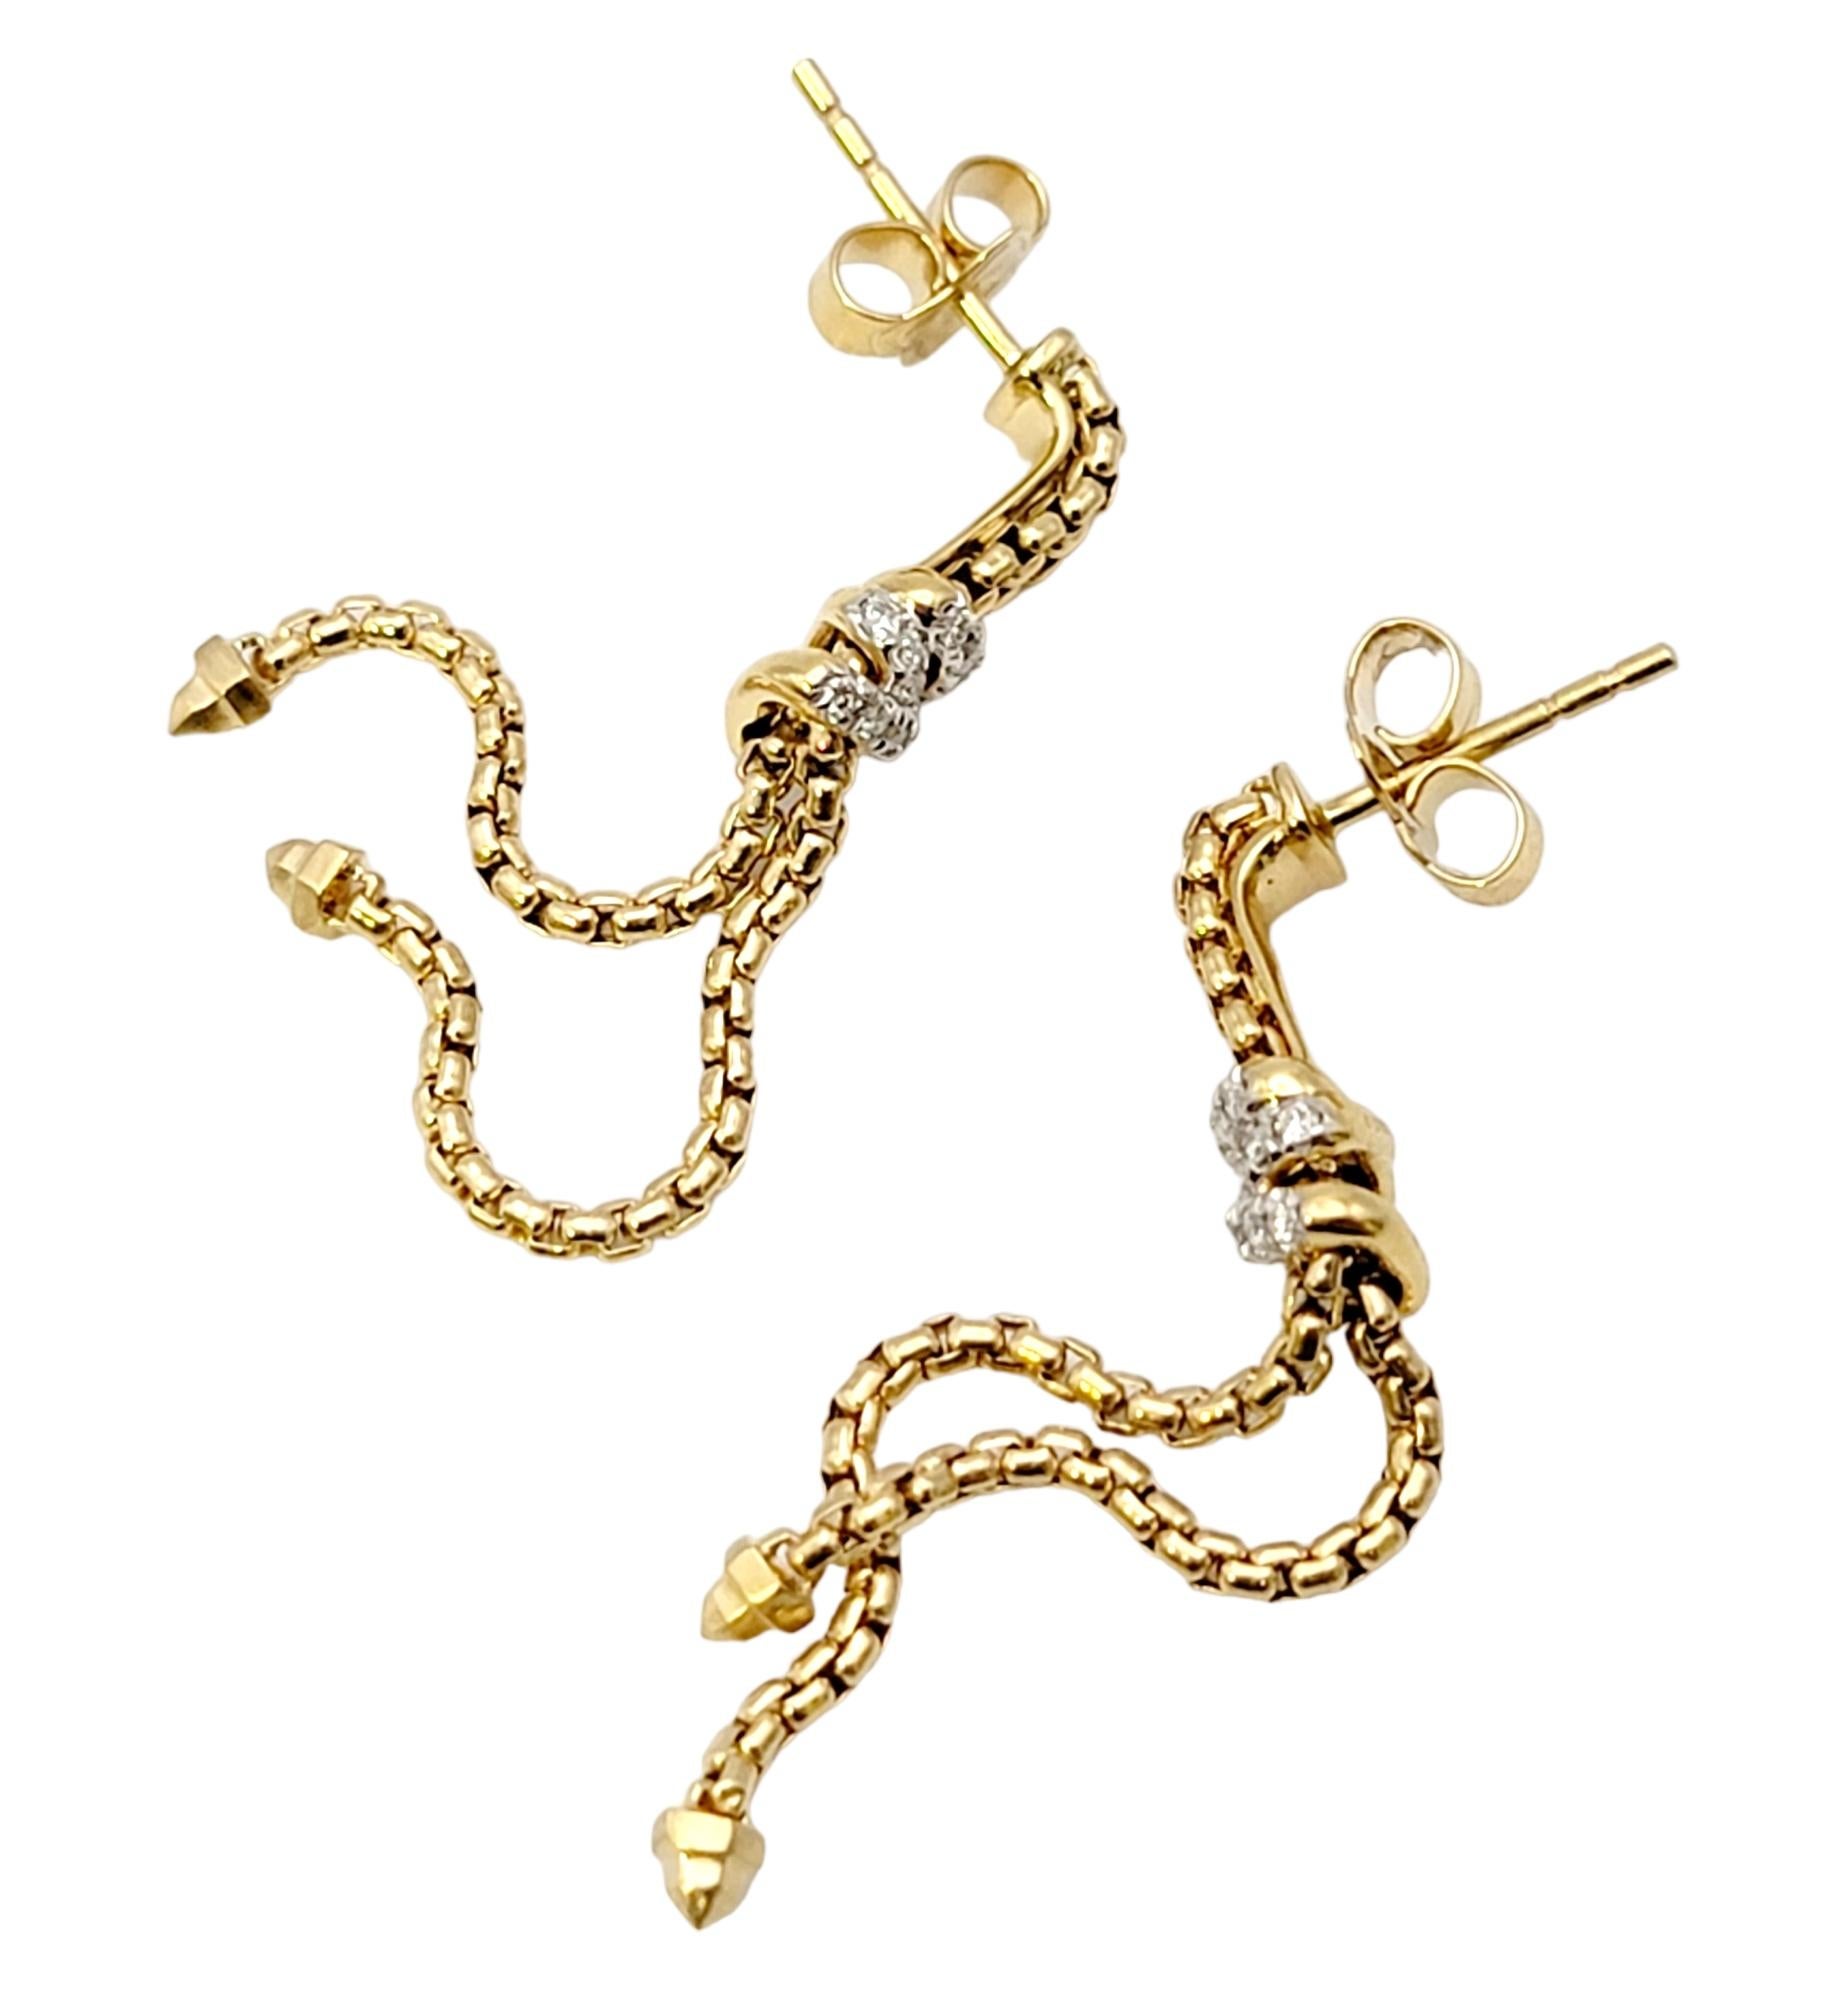 Round Cut David Yurman Helena Box Chain Drop Earrings with Diamonds in 18 Karat Gold